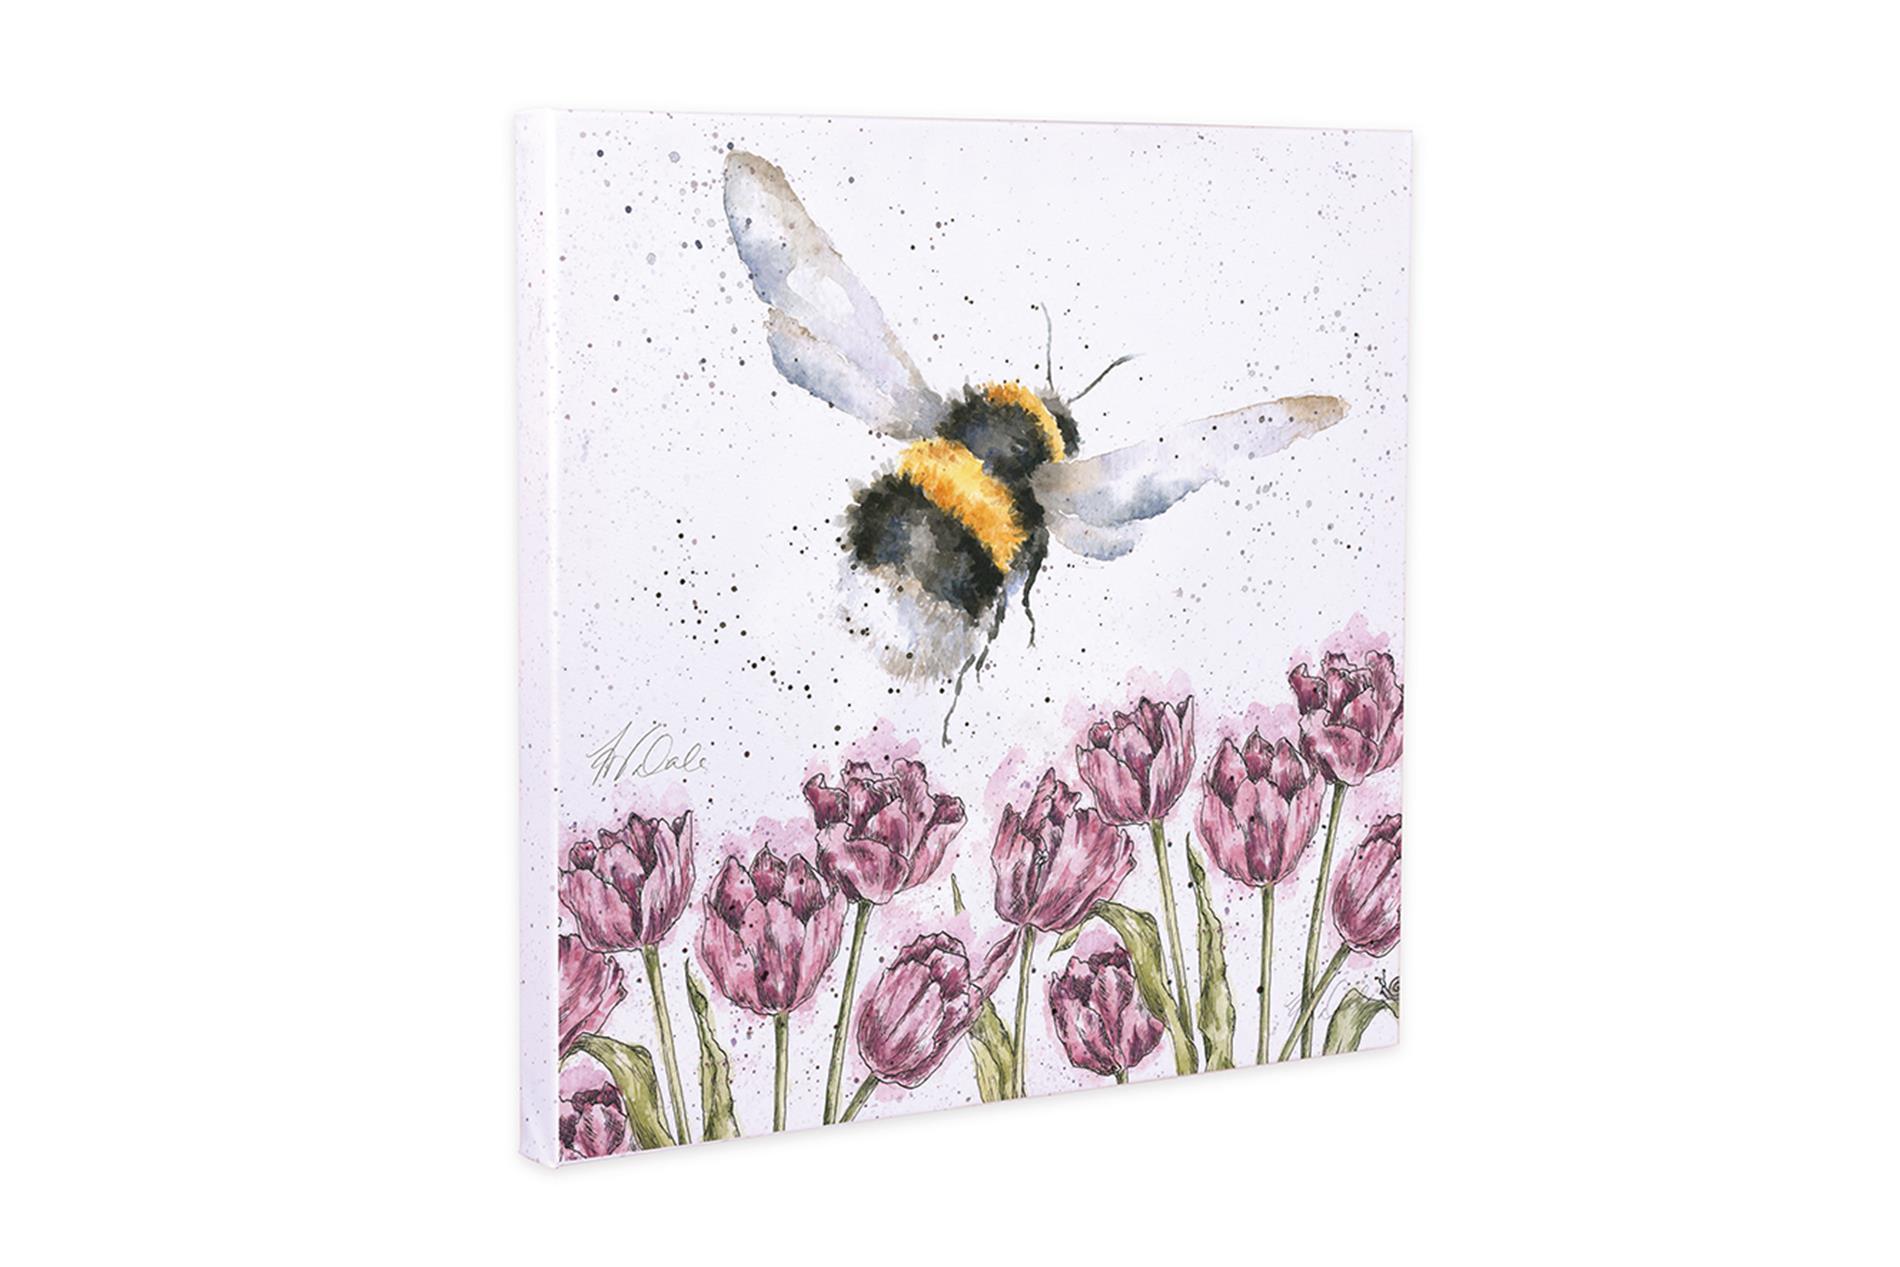 Wrendale Leinwand medium, Aufdruck Hummel & Blumen, " Flight of the Bumblebee",  50x50cm